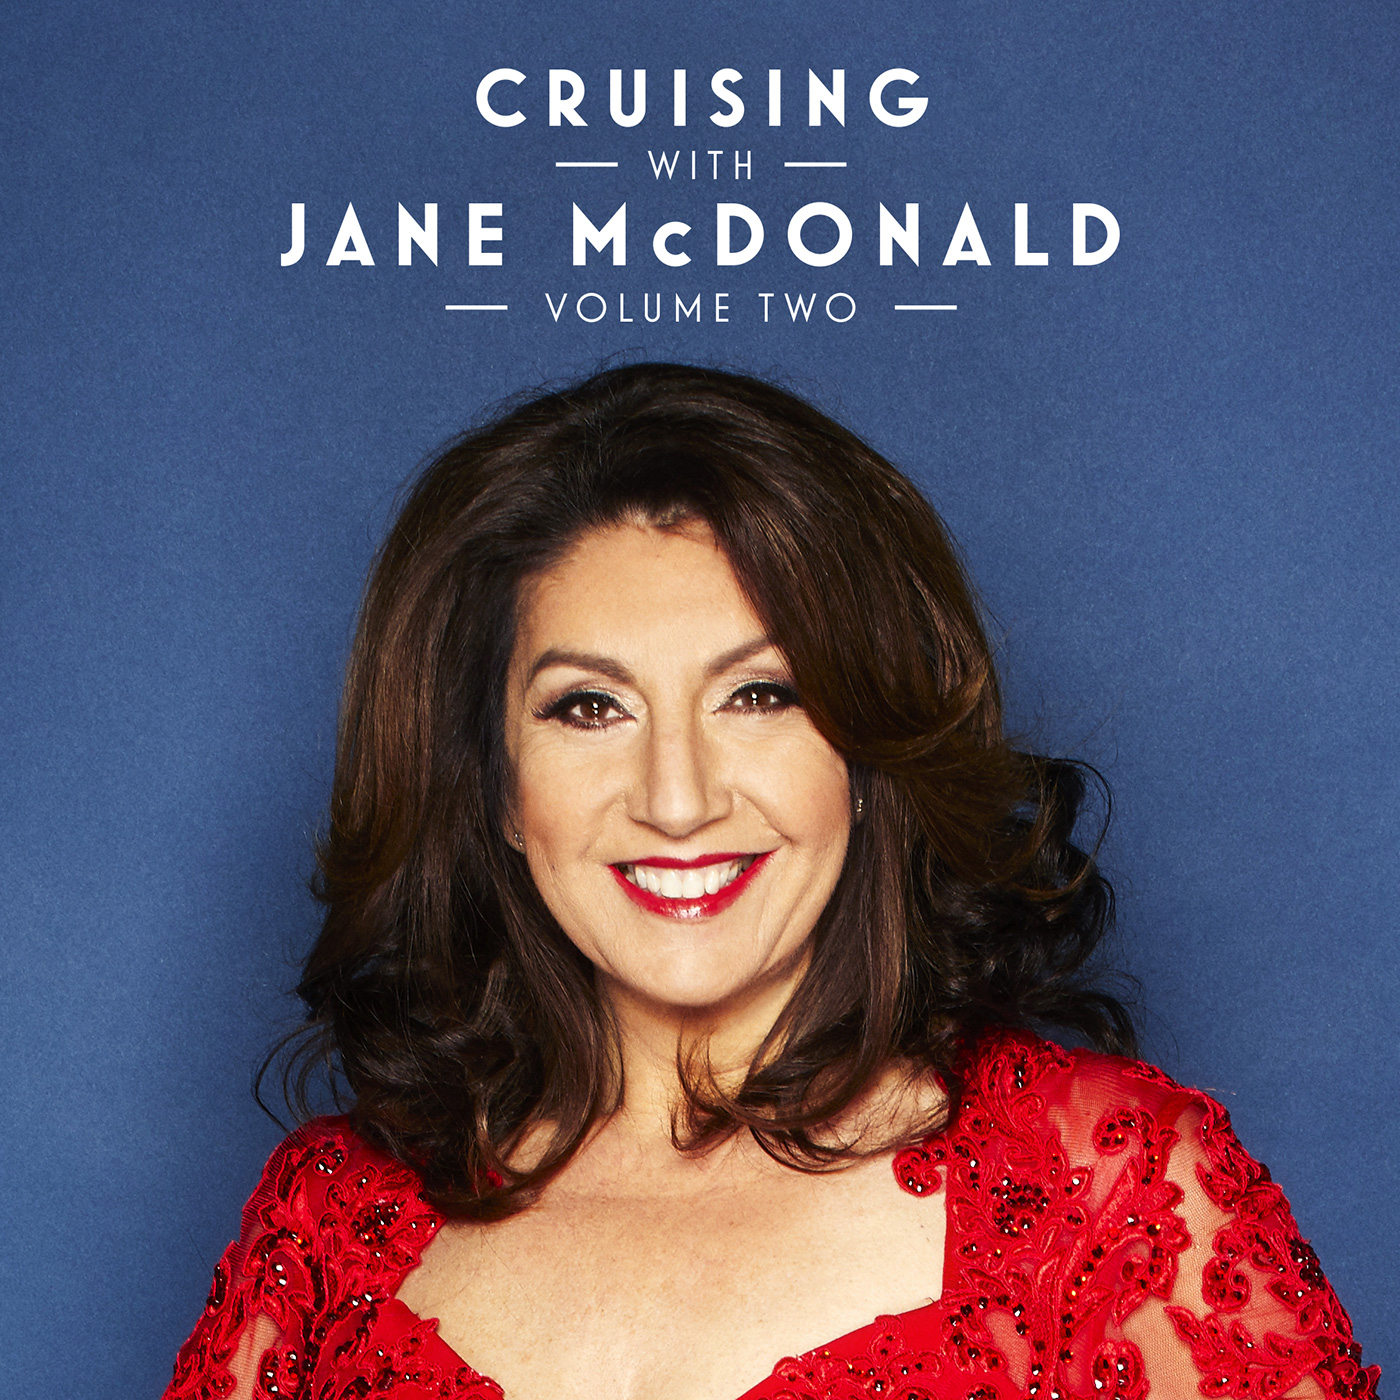 jane mcdonald on msc cruise